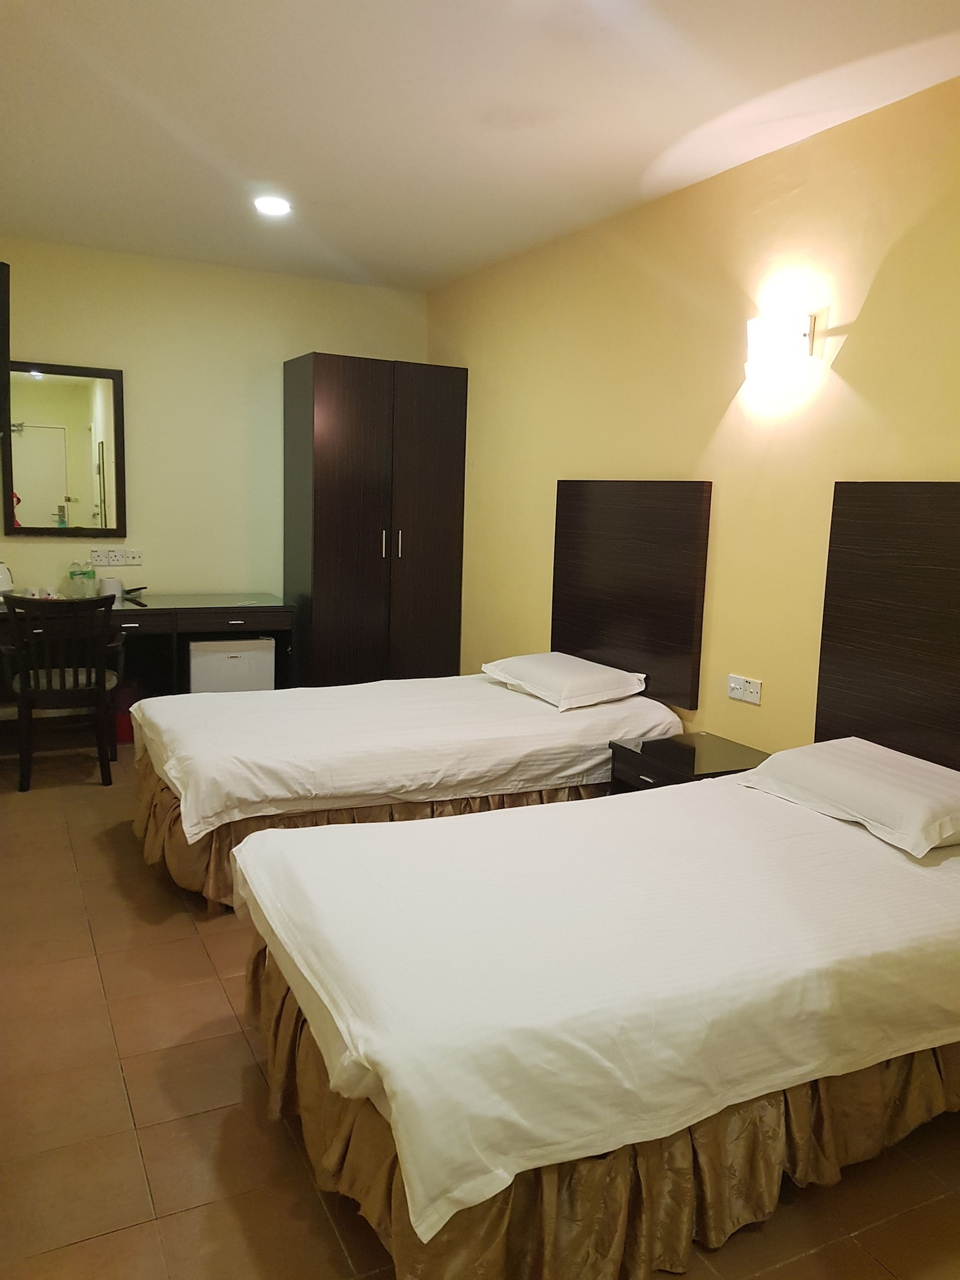 Bedroom 3, New City Hotel, Hulu Langat